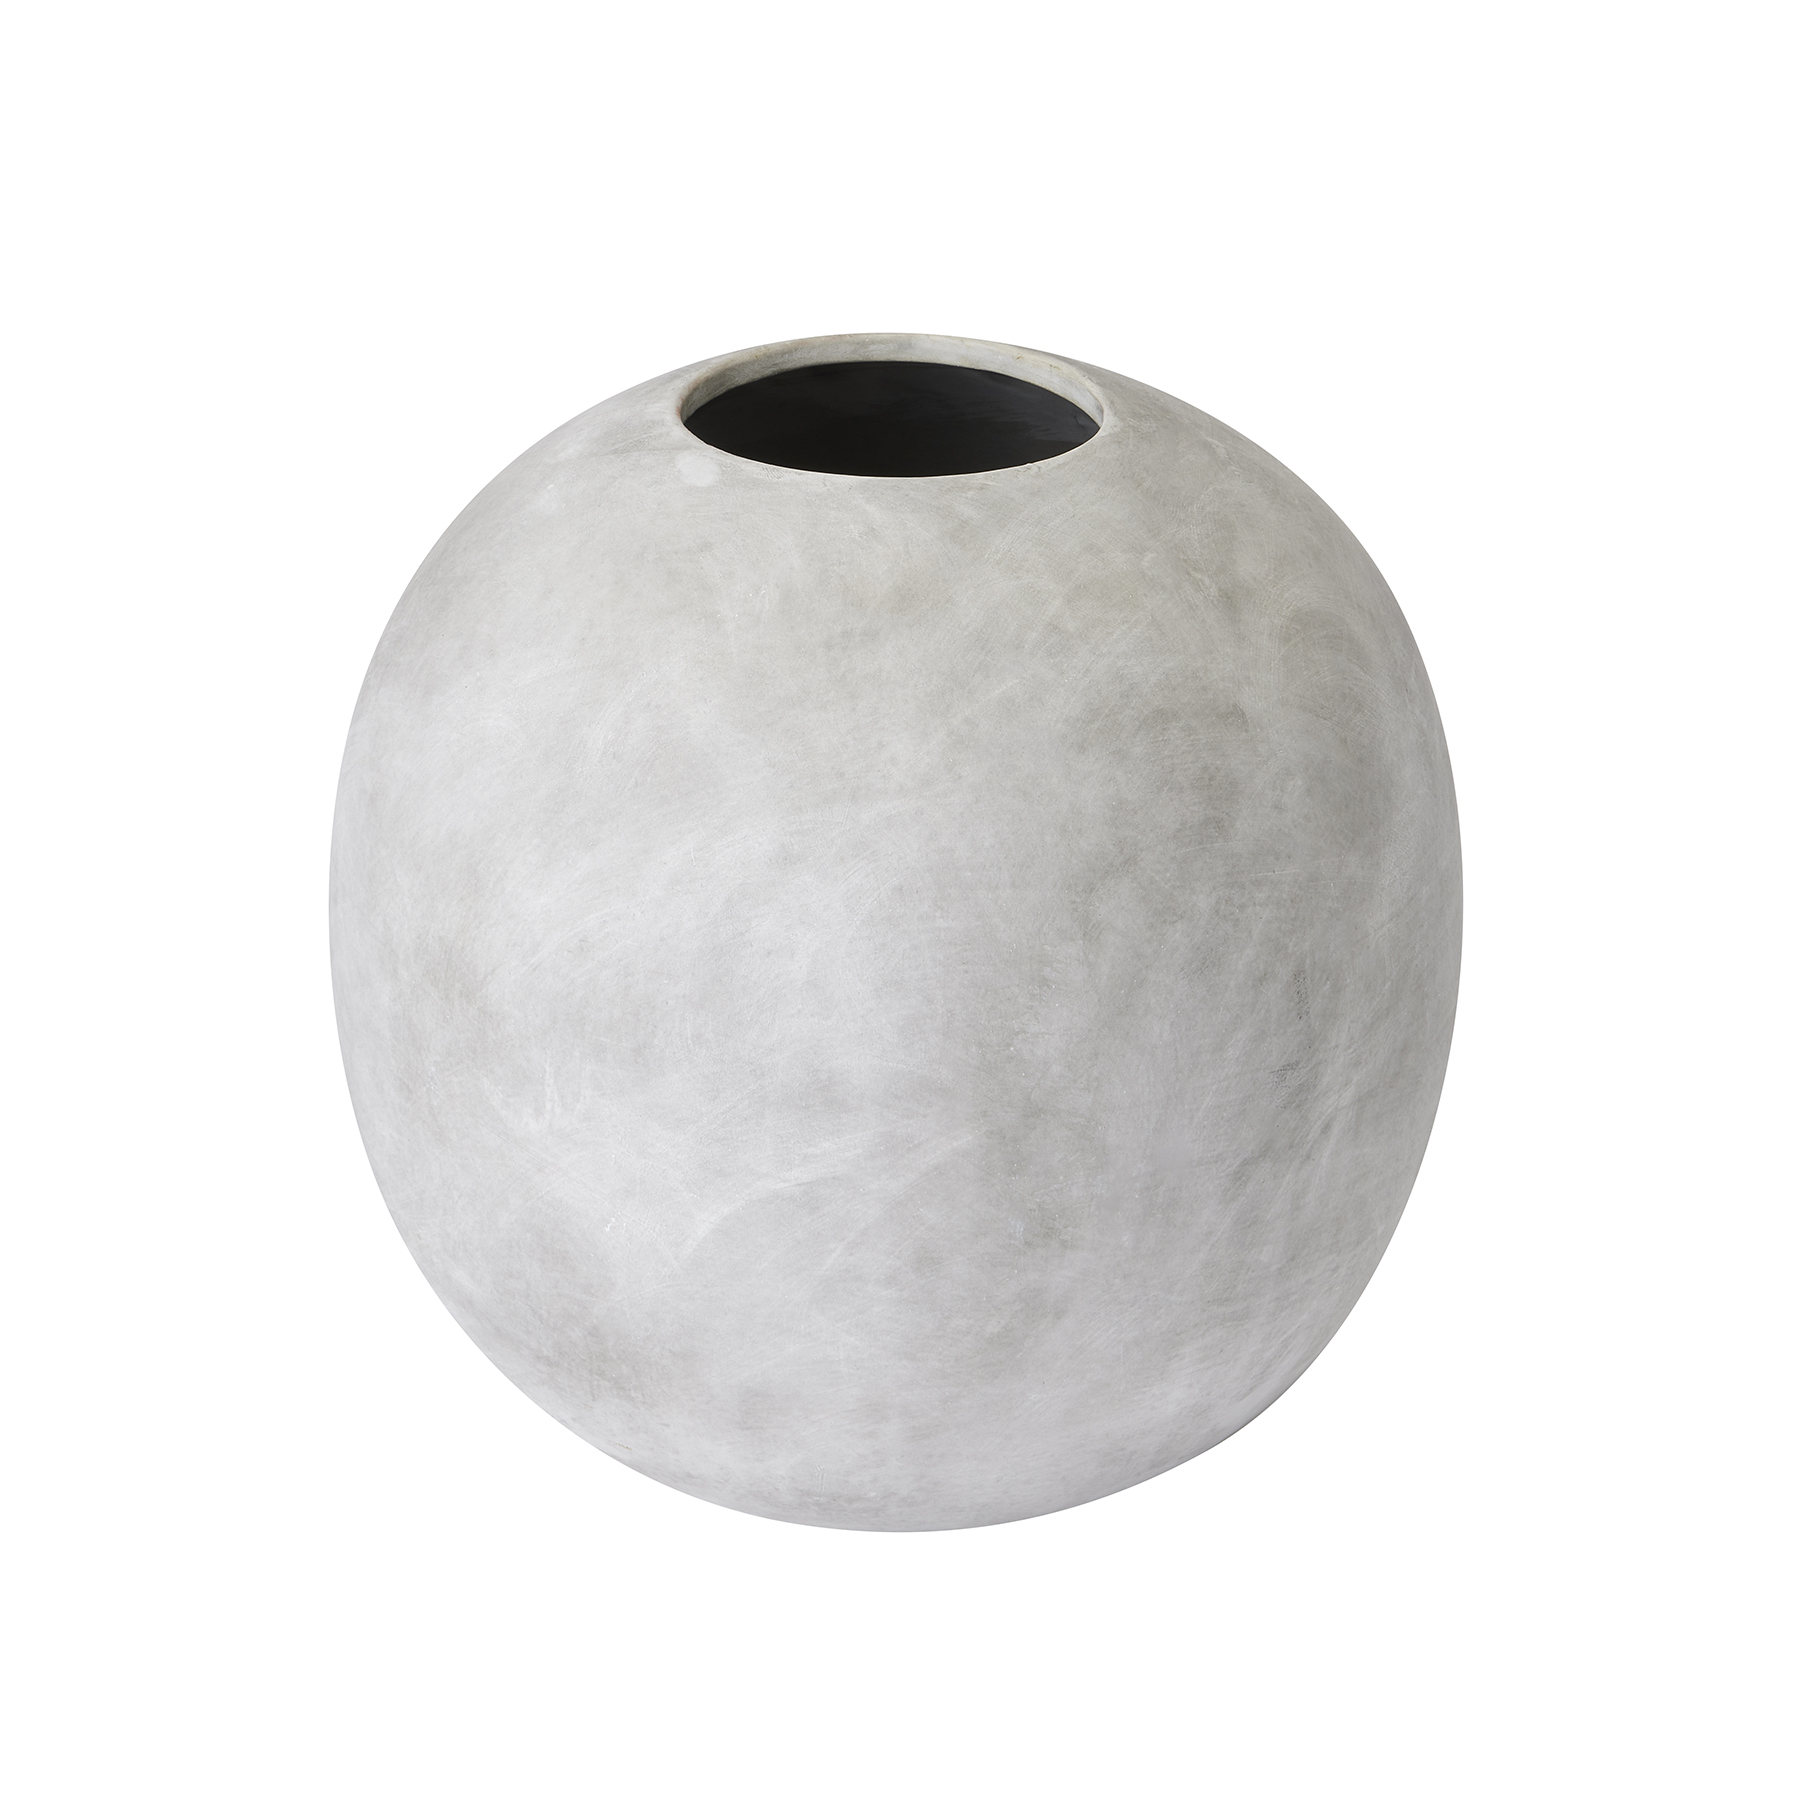 Darcy Small Globe Vase - Image 1